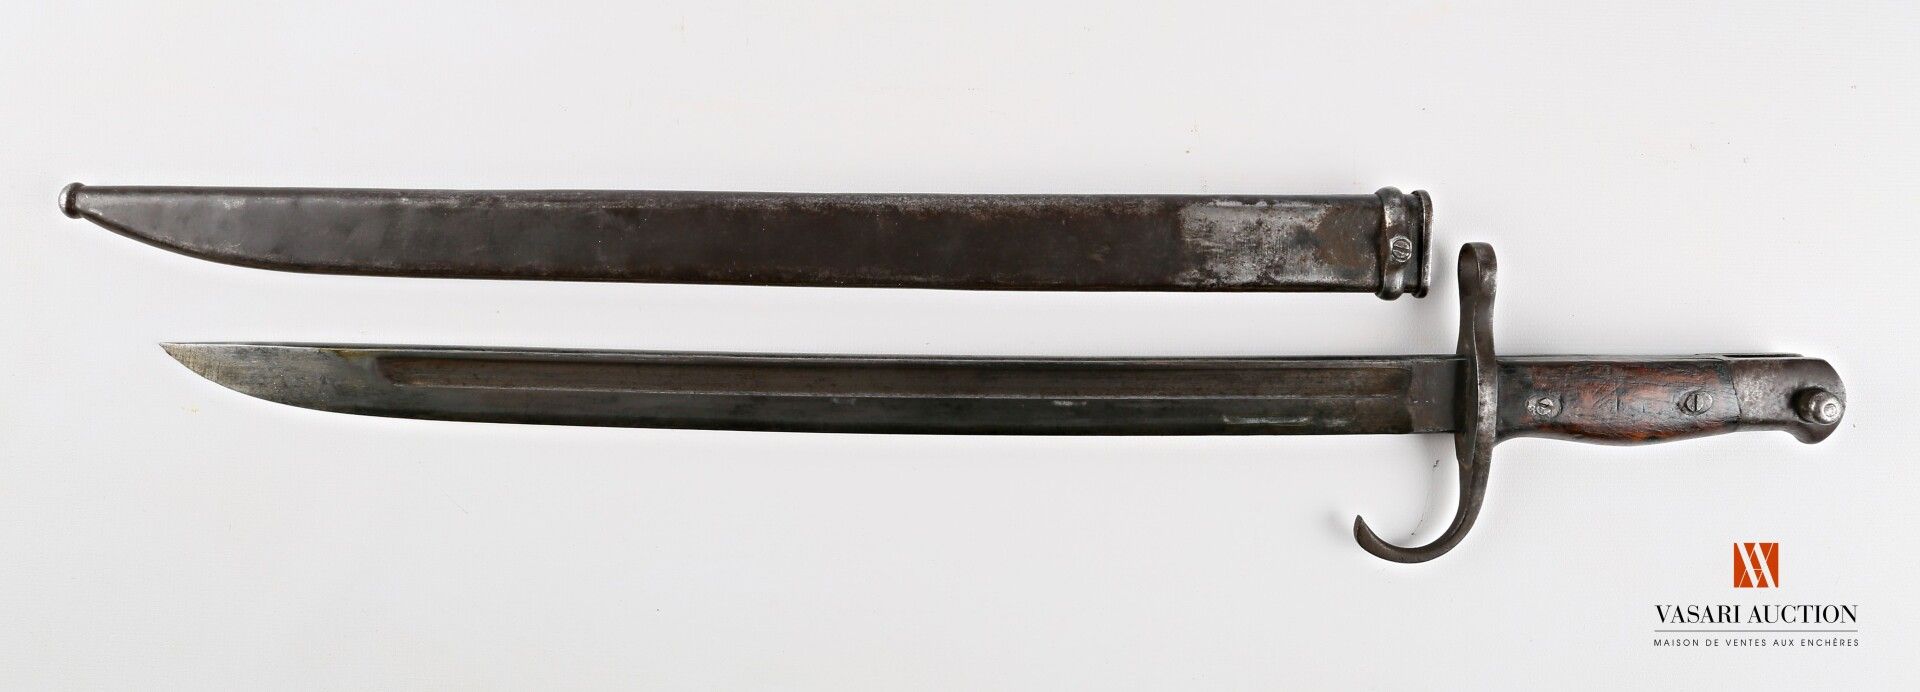 Null Arizaka 30型刺刀，直刃39.6厘米，后跟处有星星签名（丰川海军兵工厂），quillon巡航，光滑木板，钢制刀鞘，磨损，氧化，TL 52.5厘&hellip;